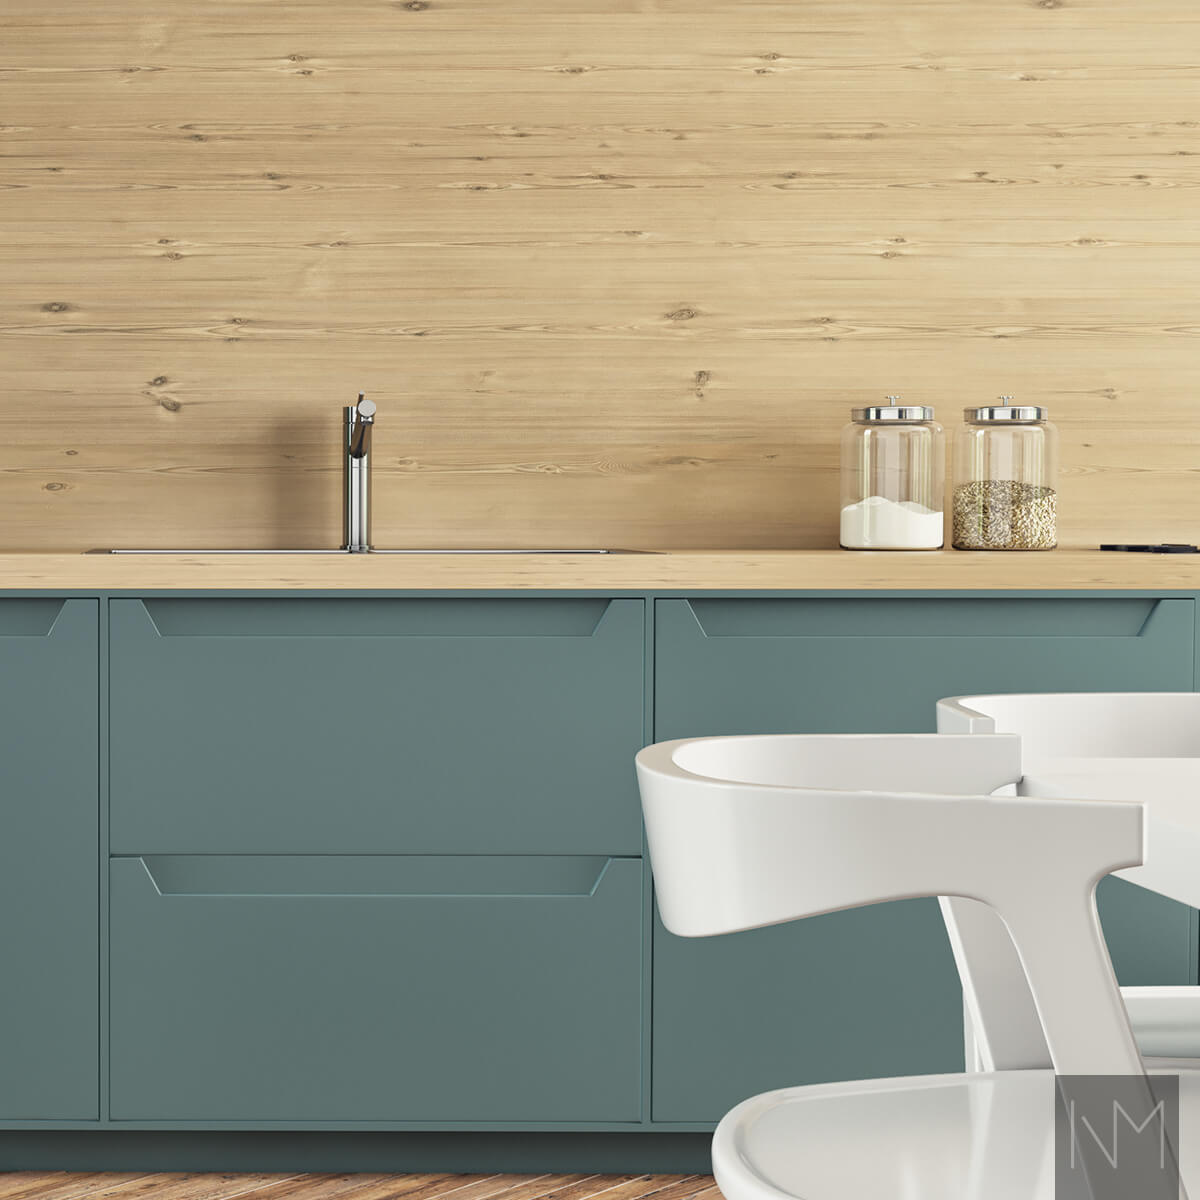 IKEA Metod or Faktum kitchen Elegance. Colour NCS 6713-B34G or Jotun Dark Teal 5454